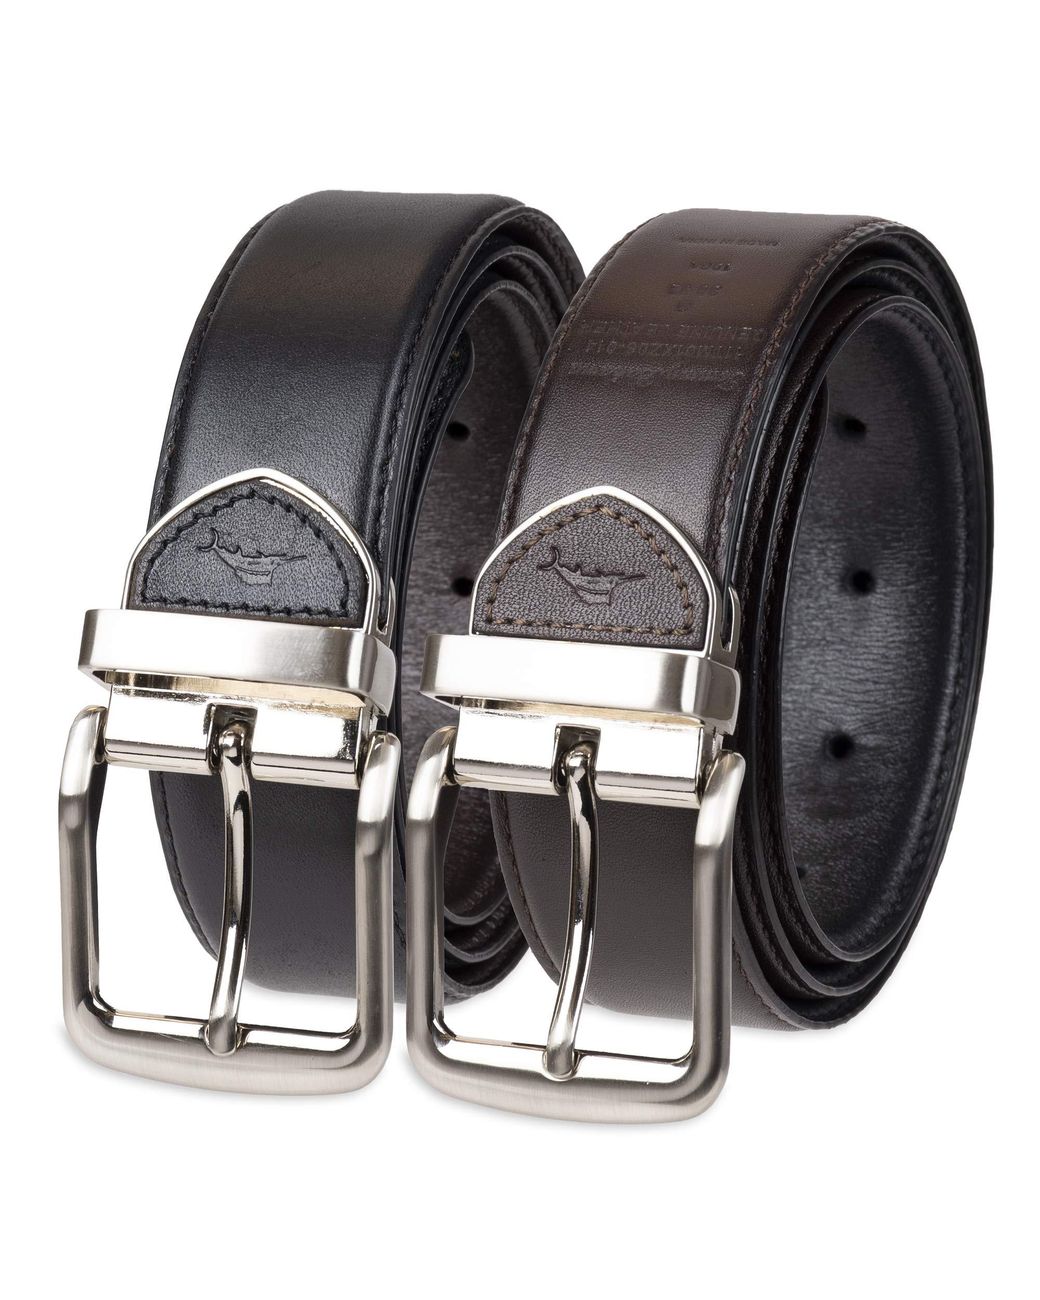 Tommy Bahama Leather Reversible Belt in Black/Brown (Black) for Men - Lyst